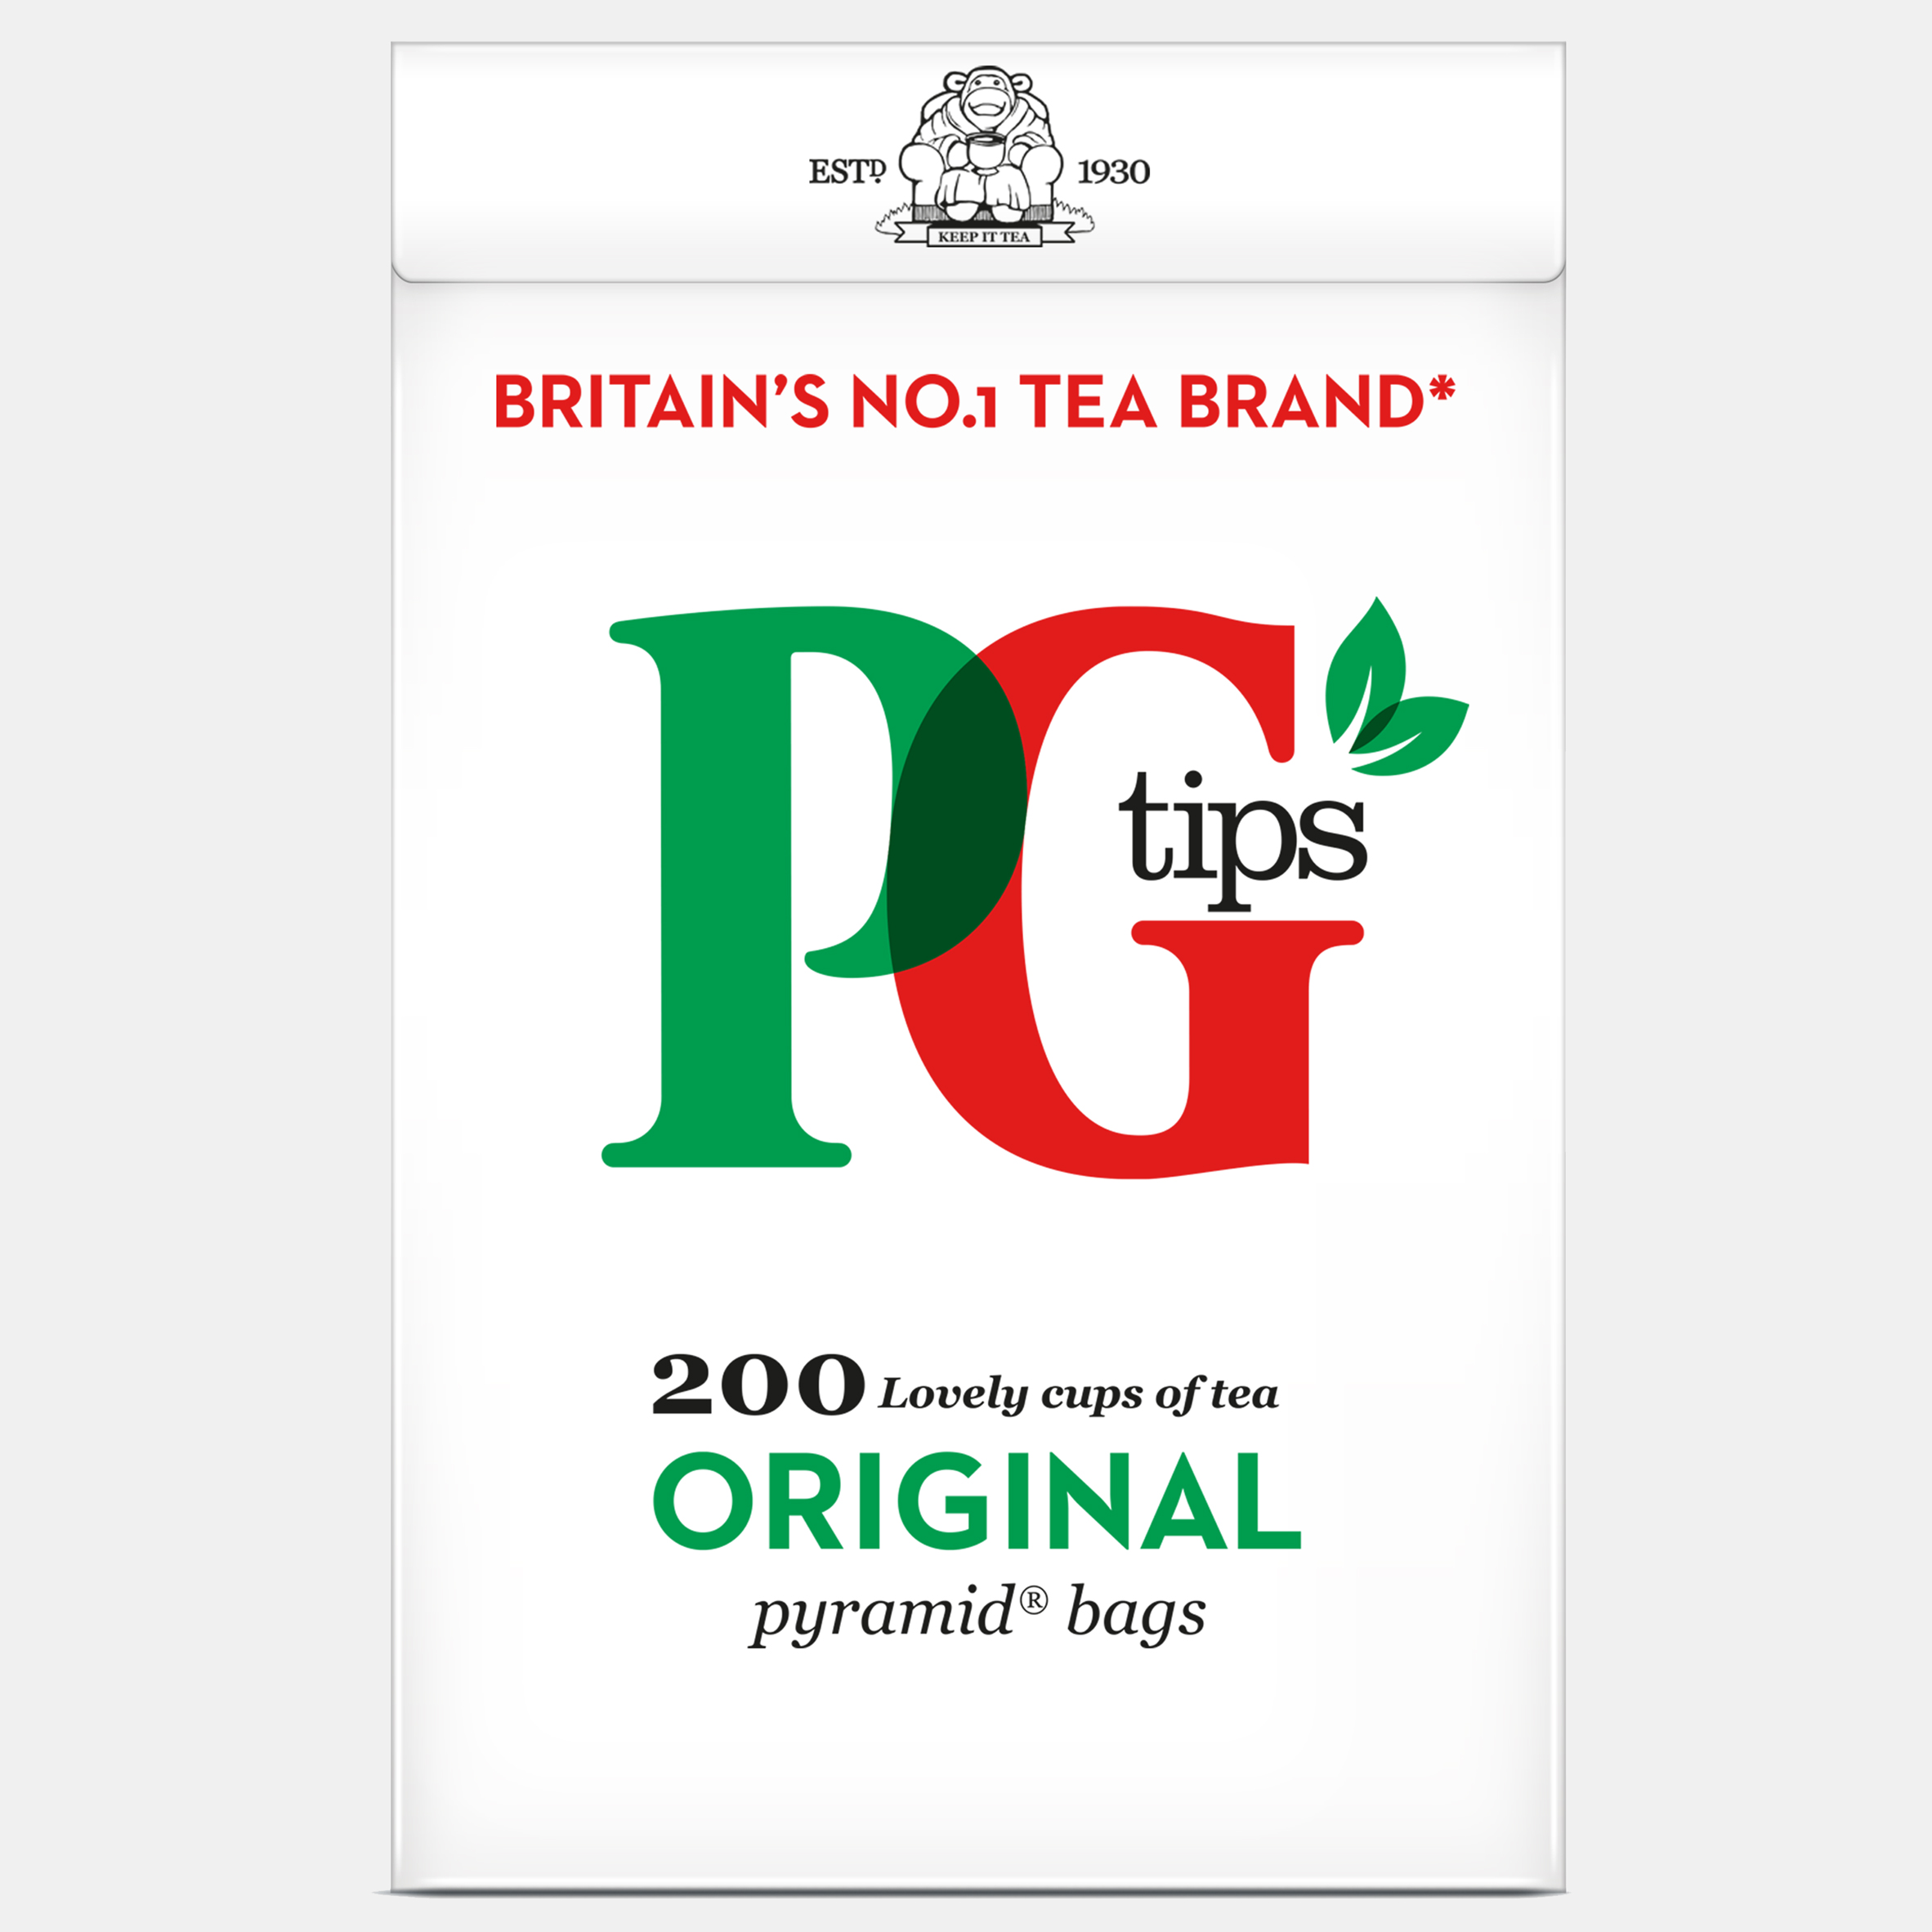 PG Tips Tea Bags video review by Morgan